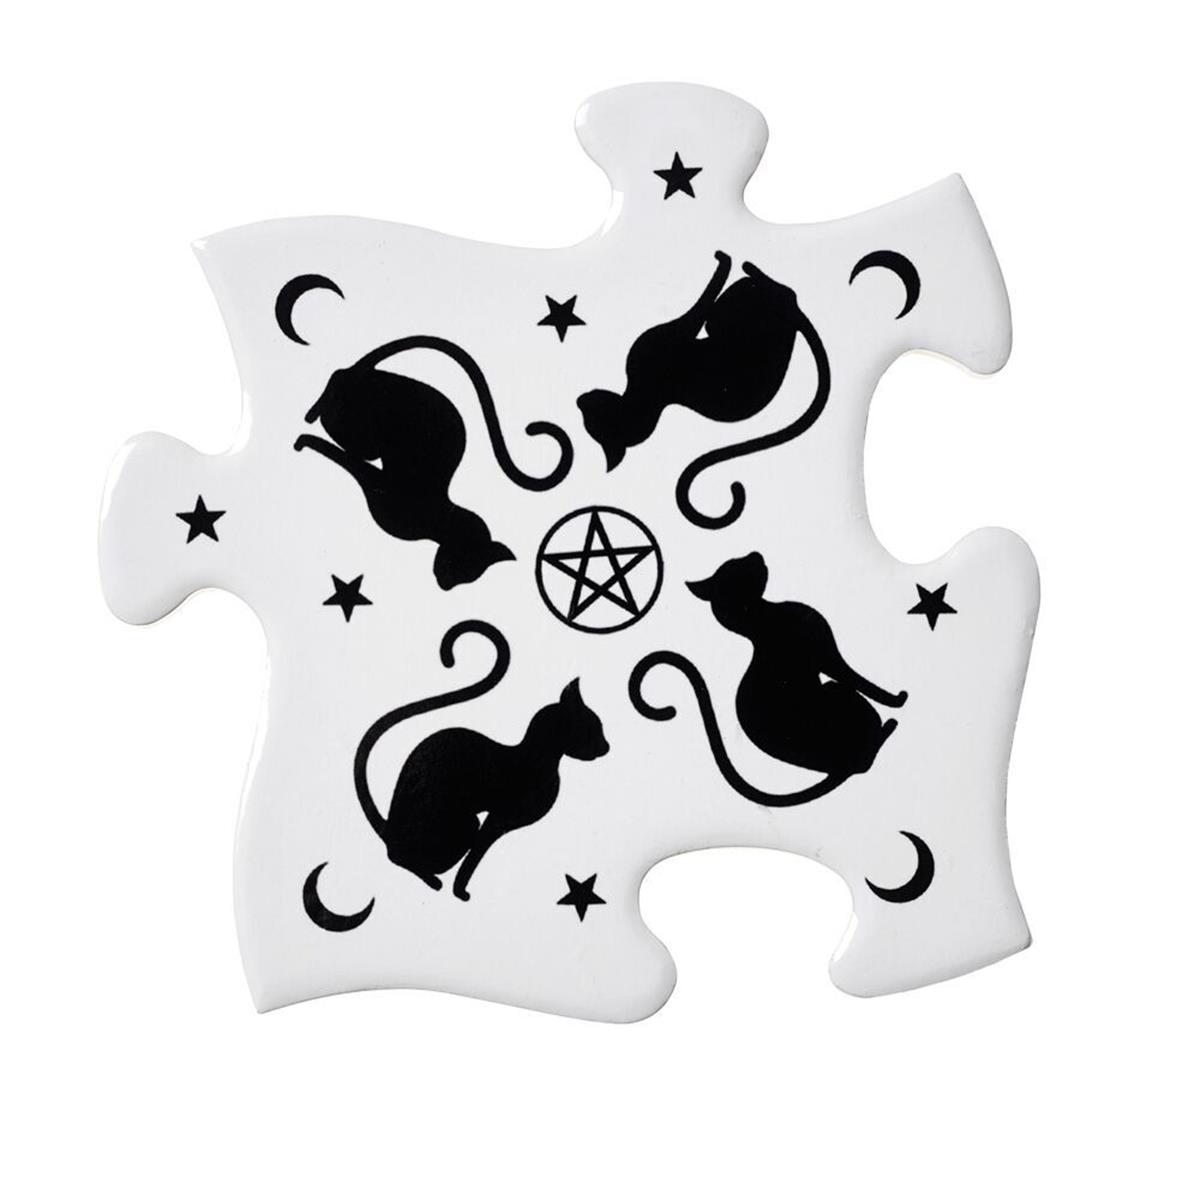 Cj3 Ceramic Black Cats Jigsaw Coaster - 4 Piece